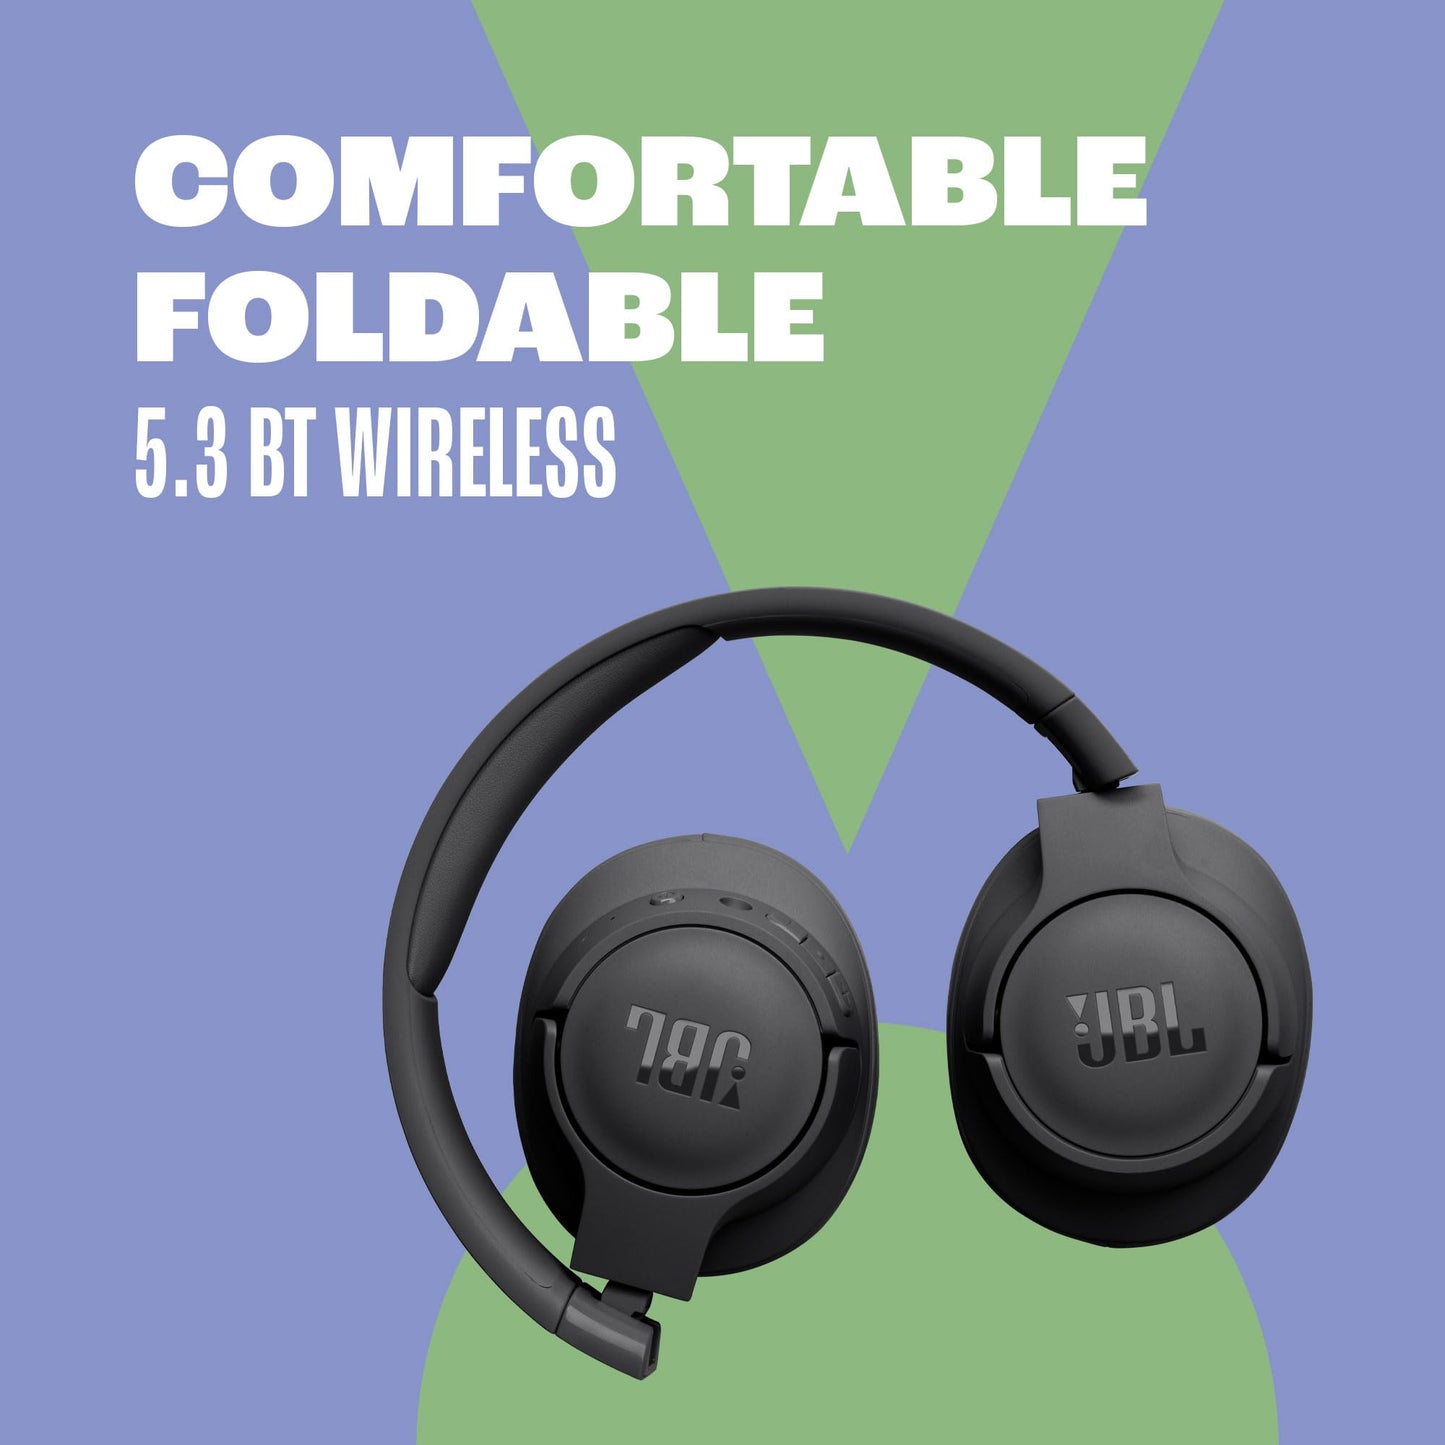 JBL T720 Over Ear Wireless Bluetooth Headphones - Blue